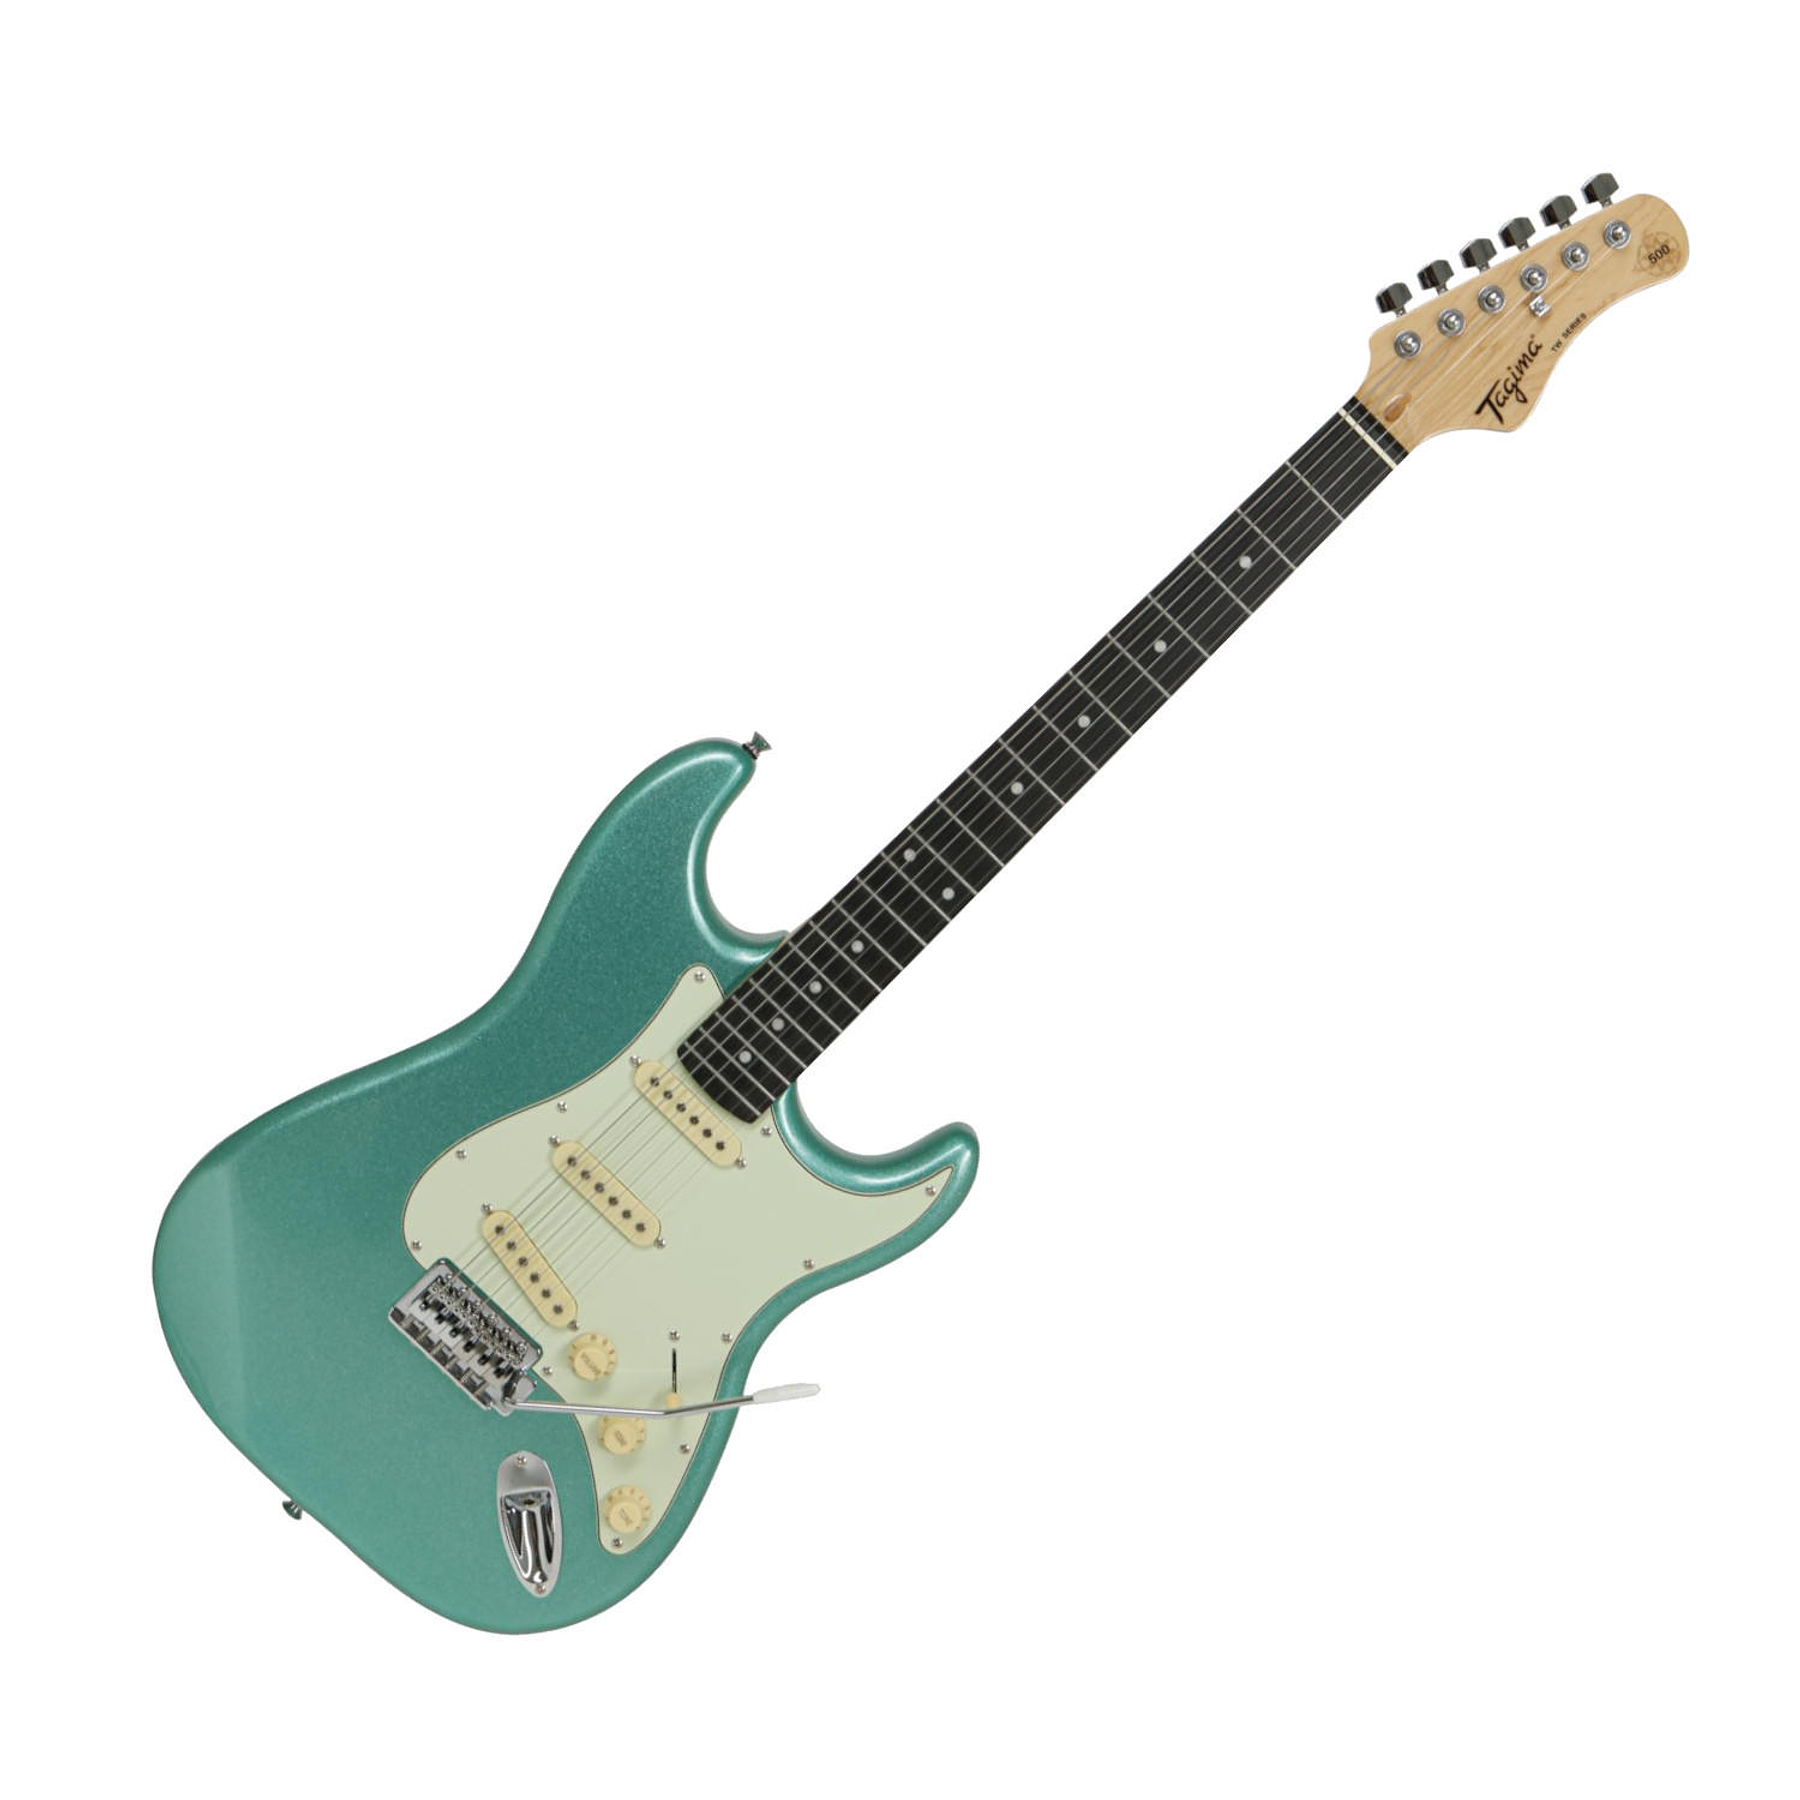 Guitarra Electrica Tagima TG-500 Metallic Surf Green